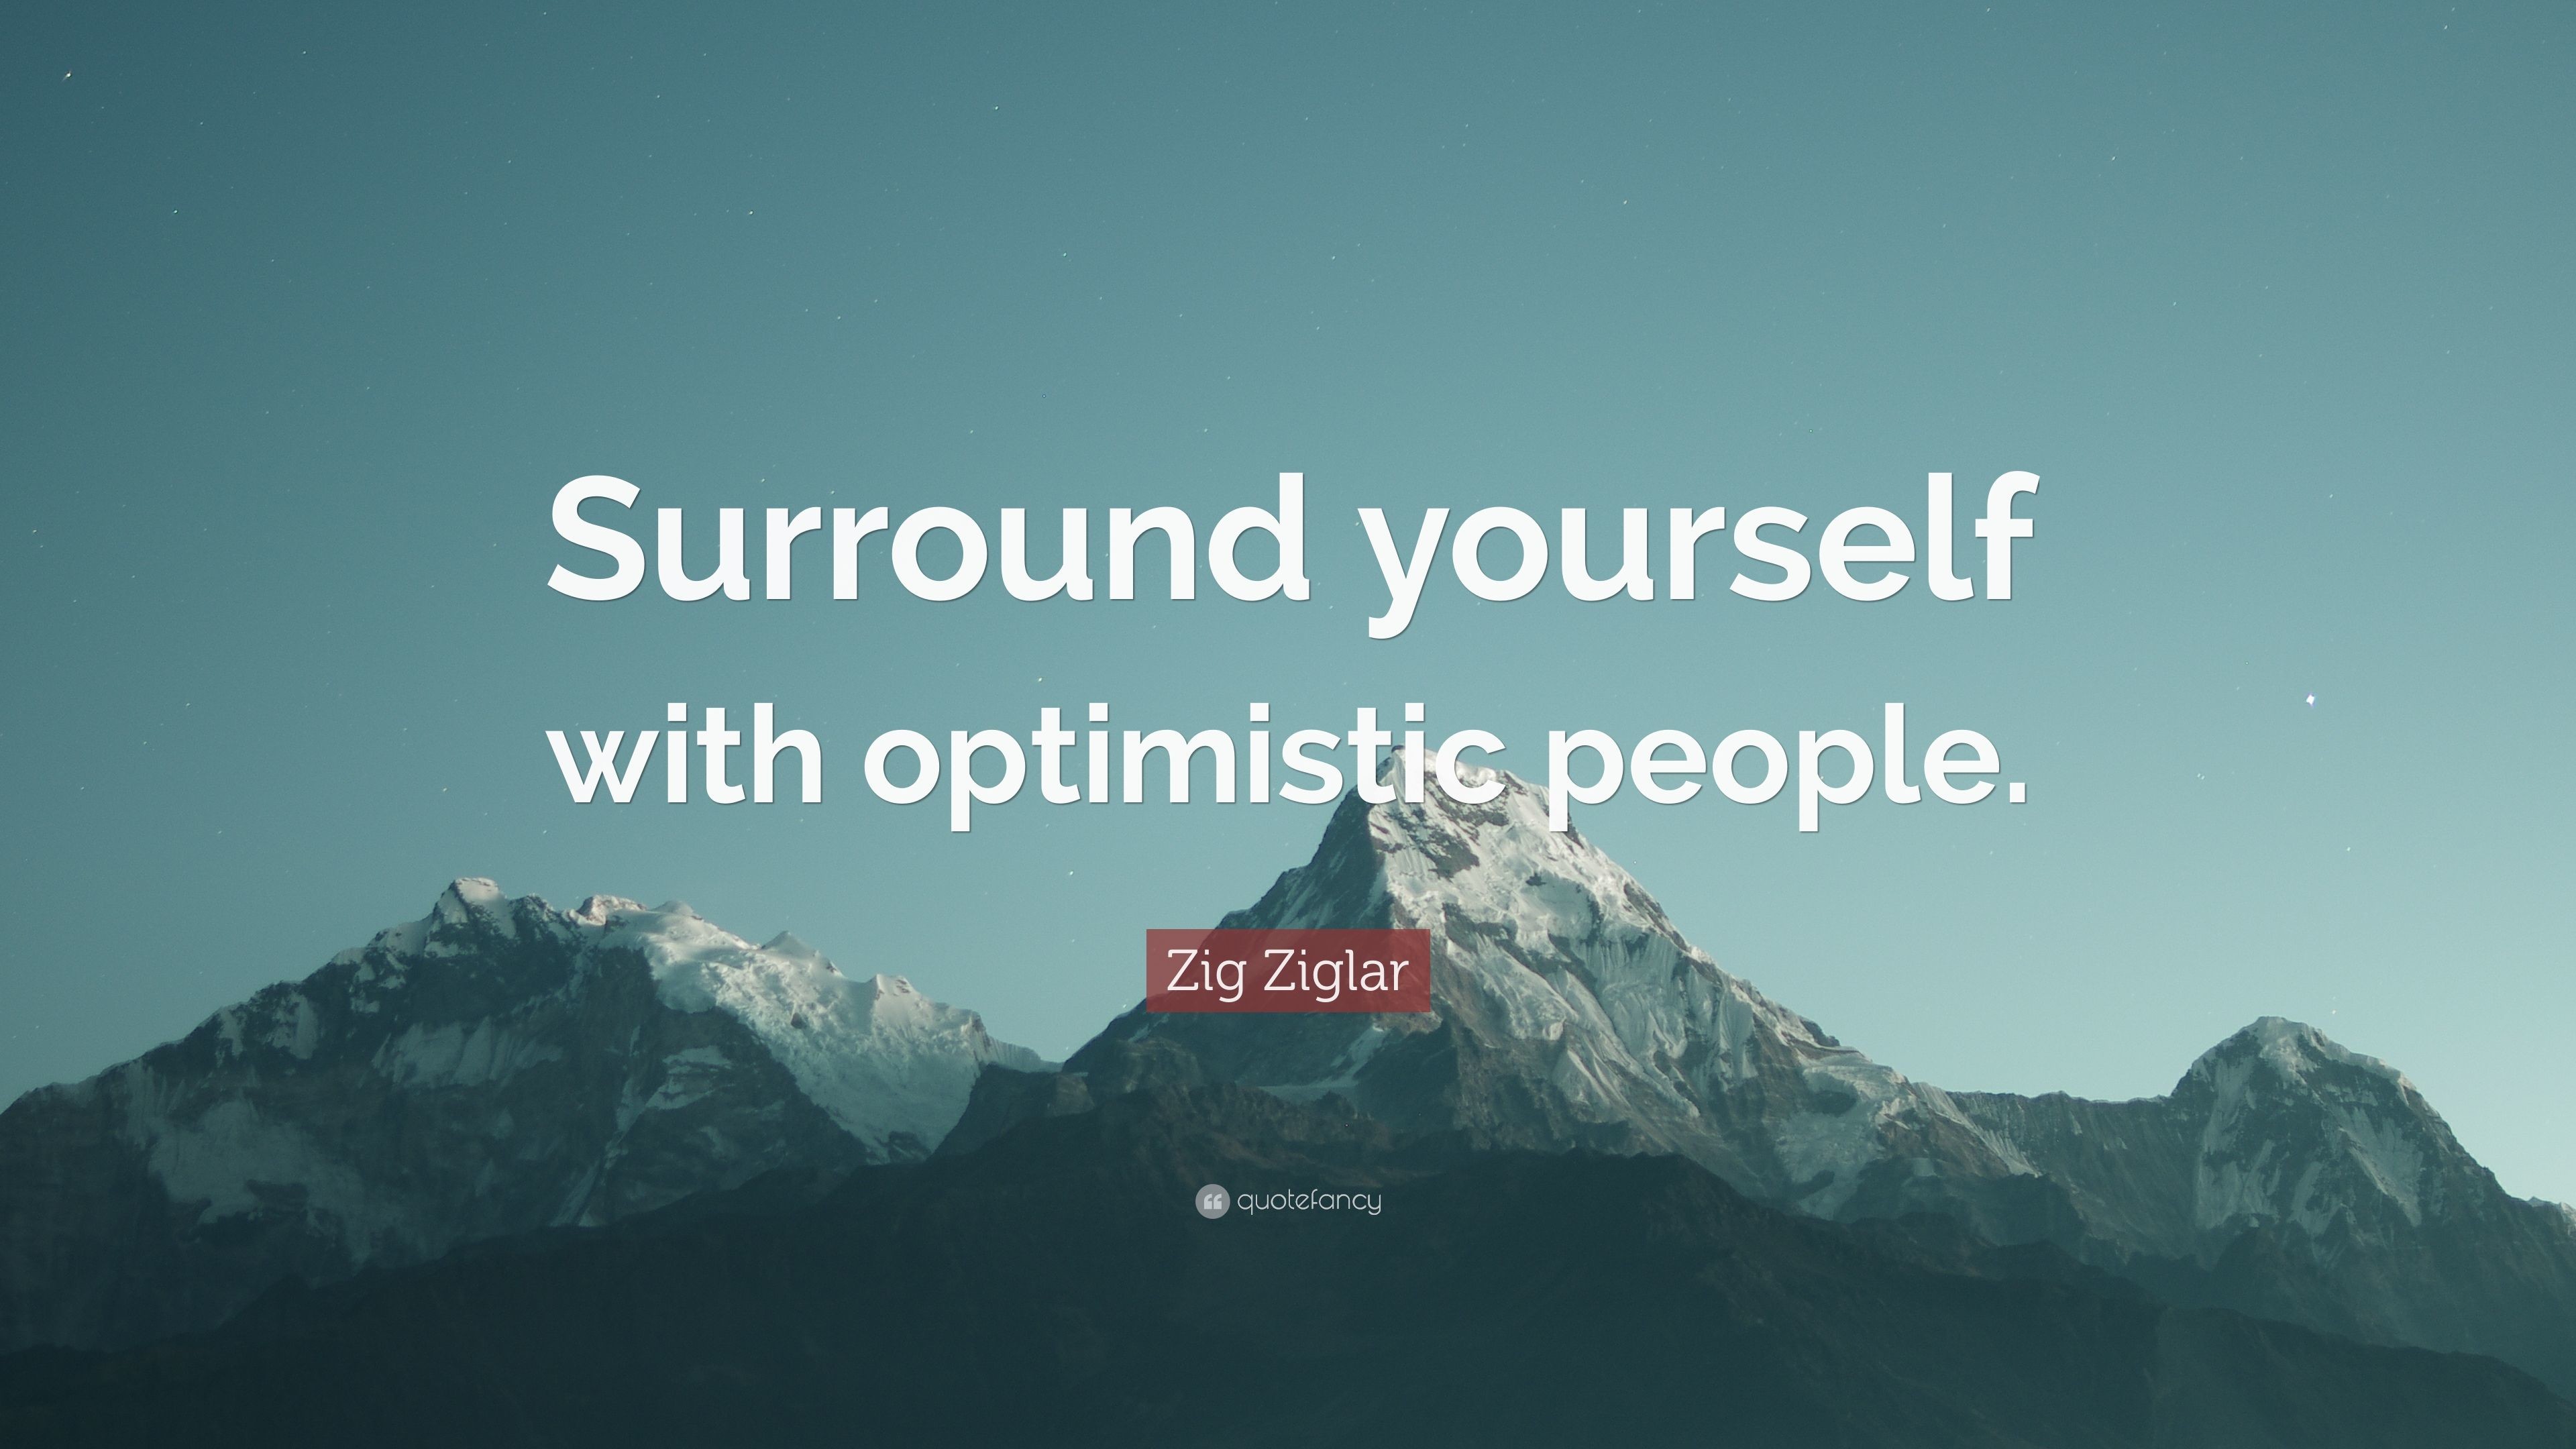 3840x2160 Zig Ziglar Quote: “Surround yourself with optimistic people.”